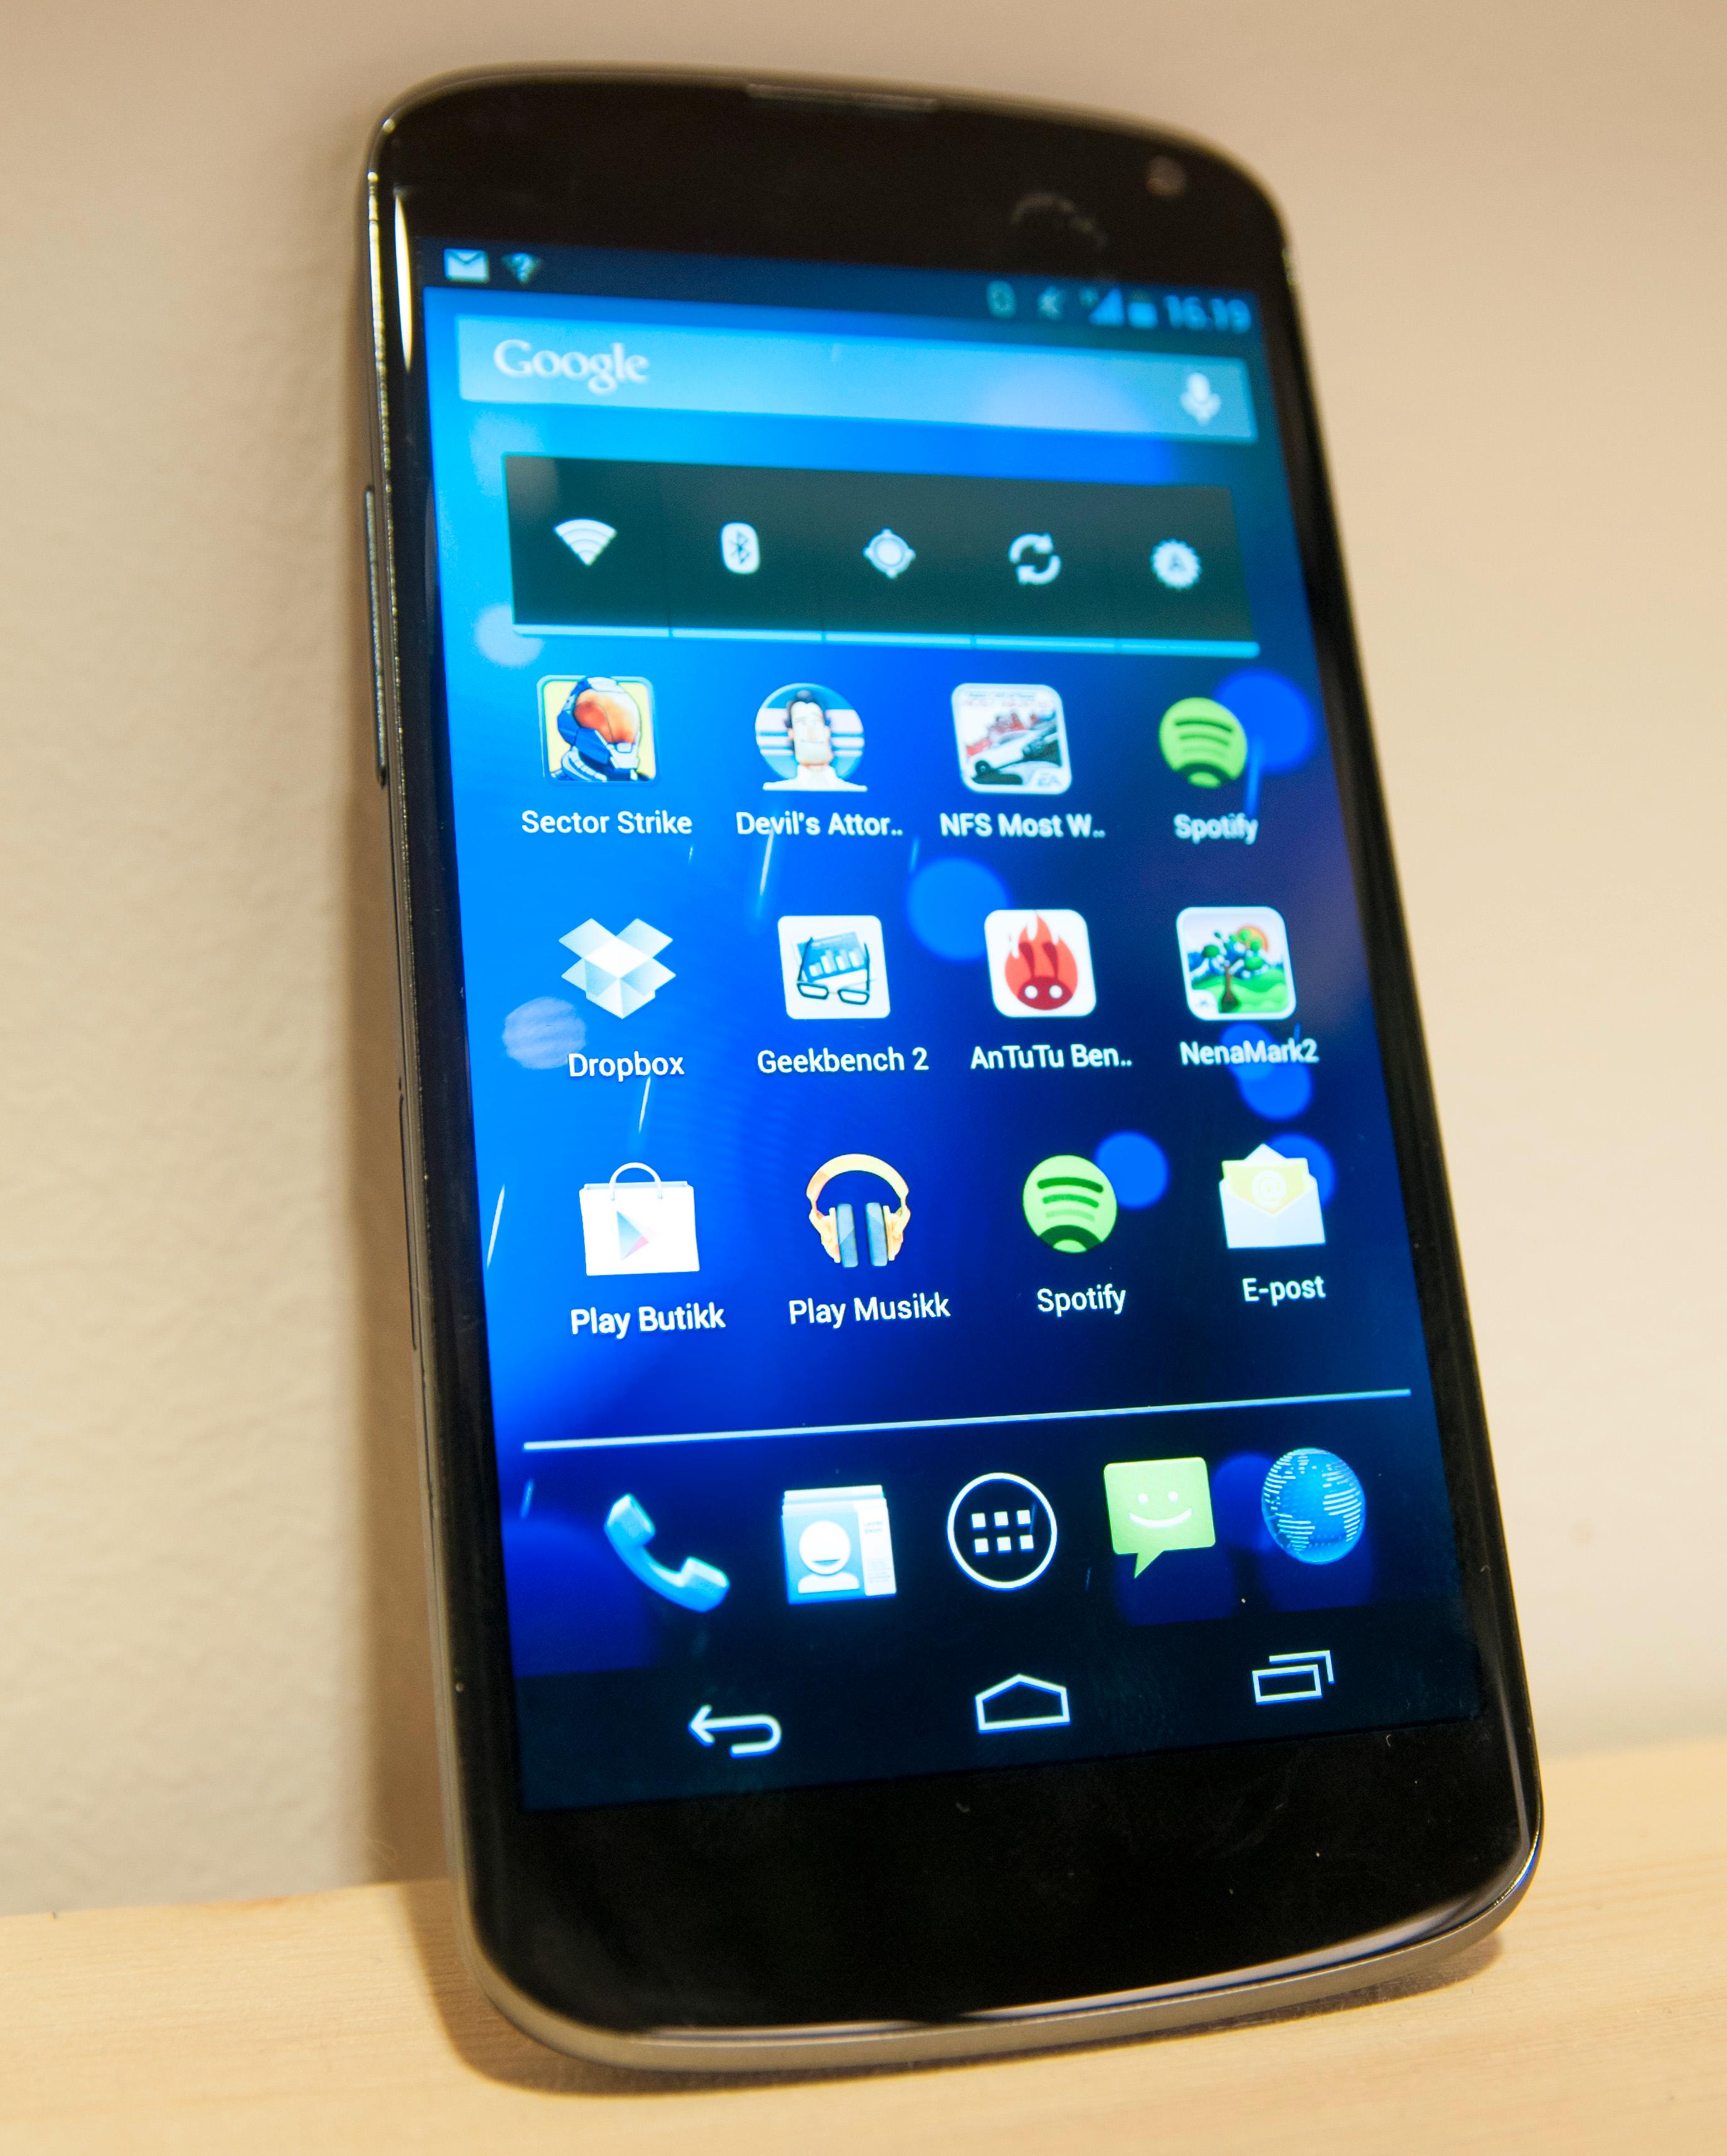 Slik ser LG Nexus 4 ut på nært hold.Foto: Finn Jarle Kvalheim, Amobil.no